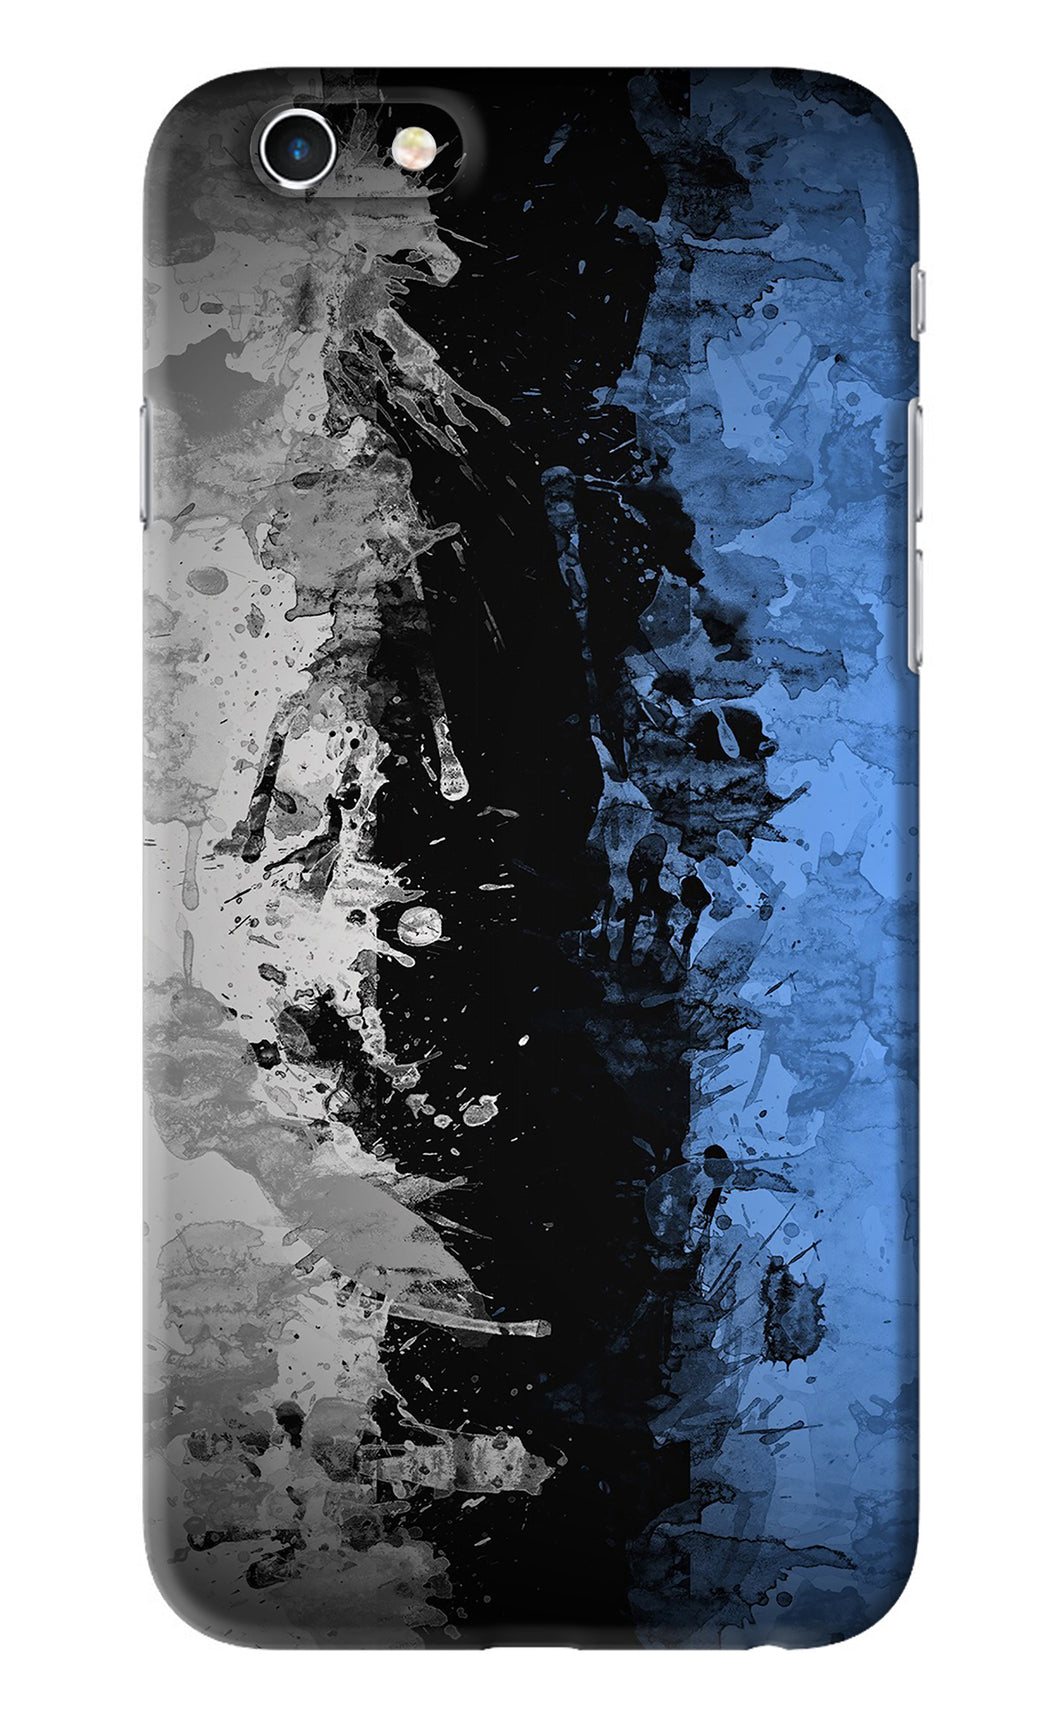 Artistic Design iPhone 6S Back Skin Wrap